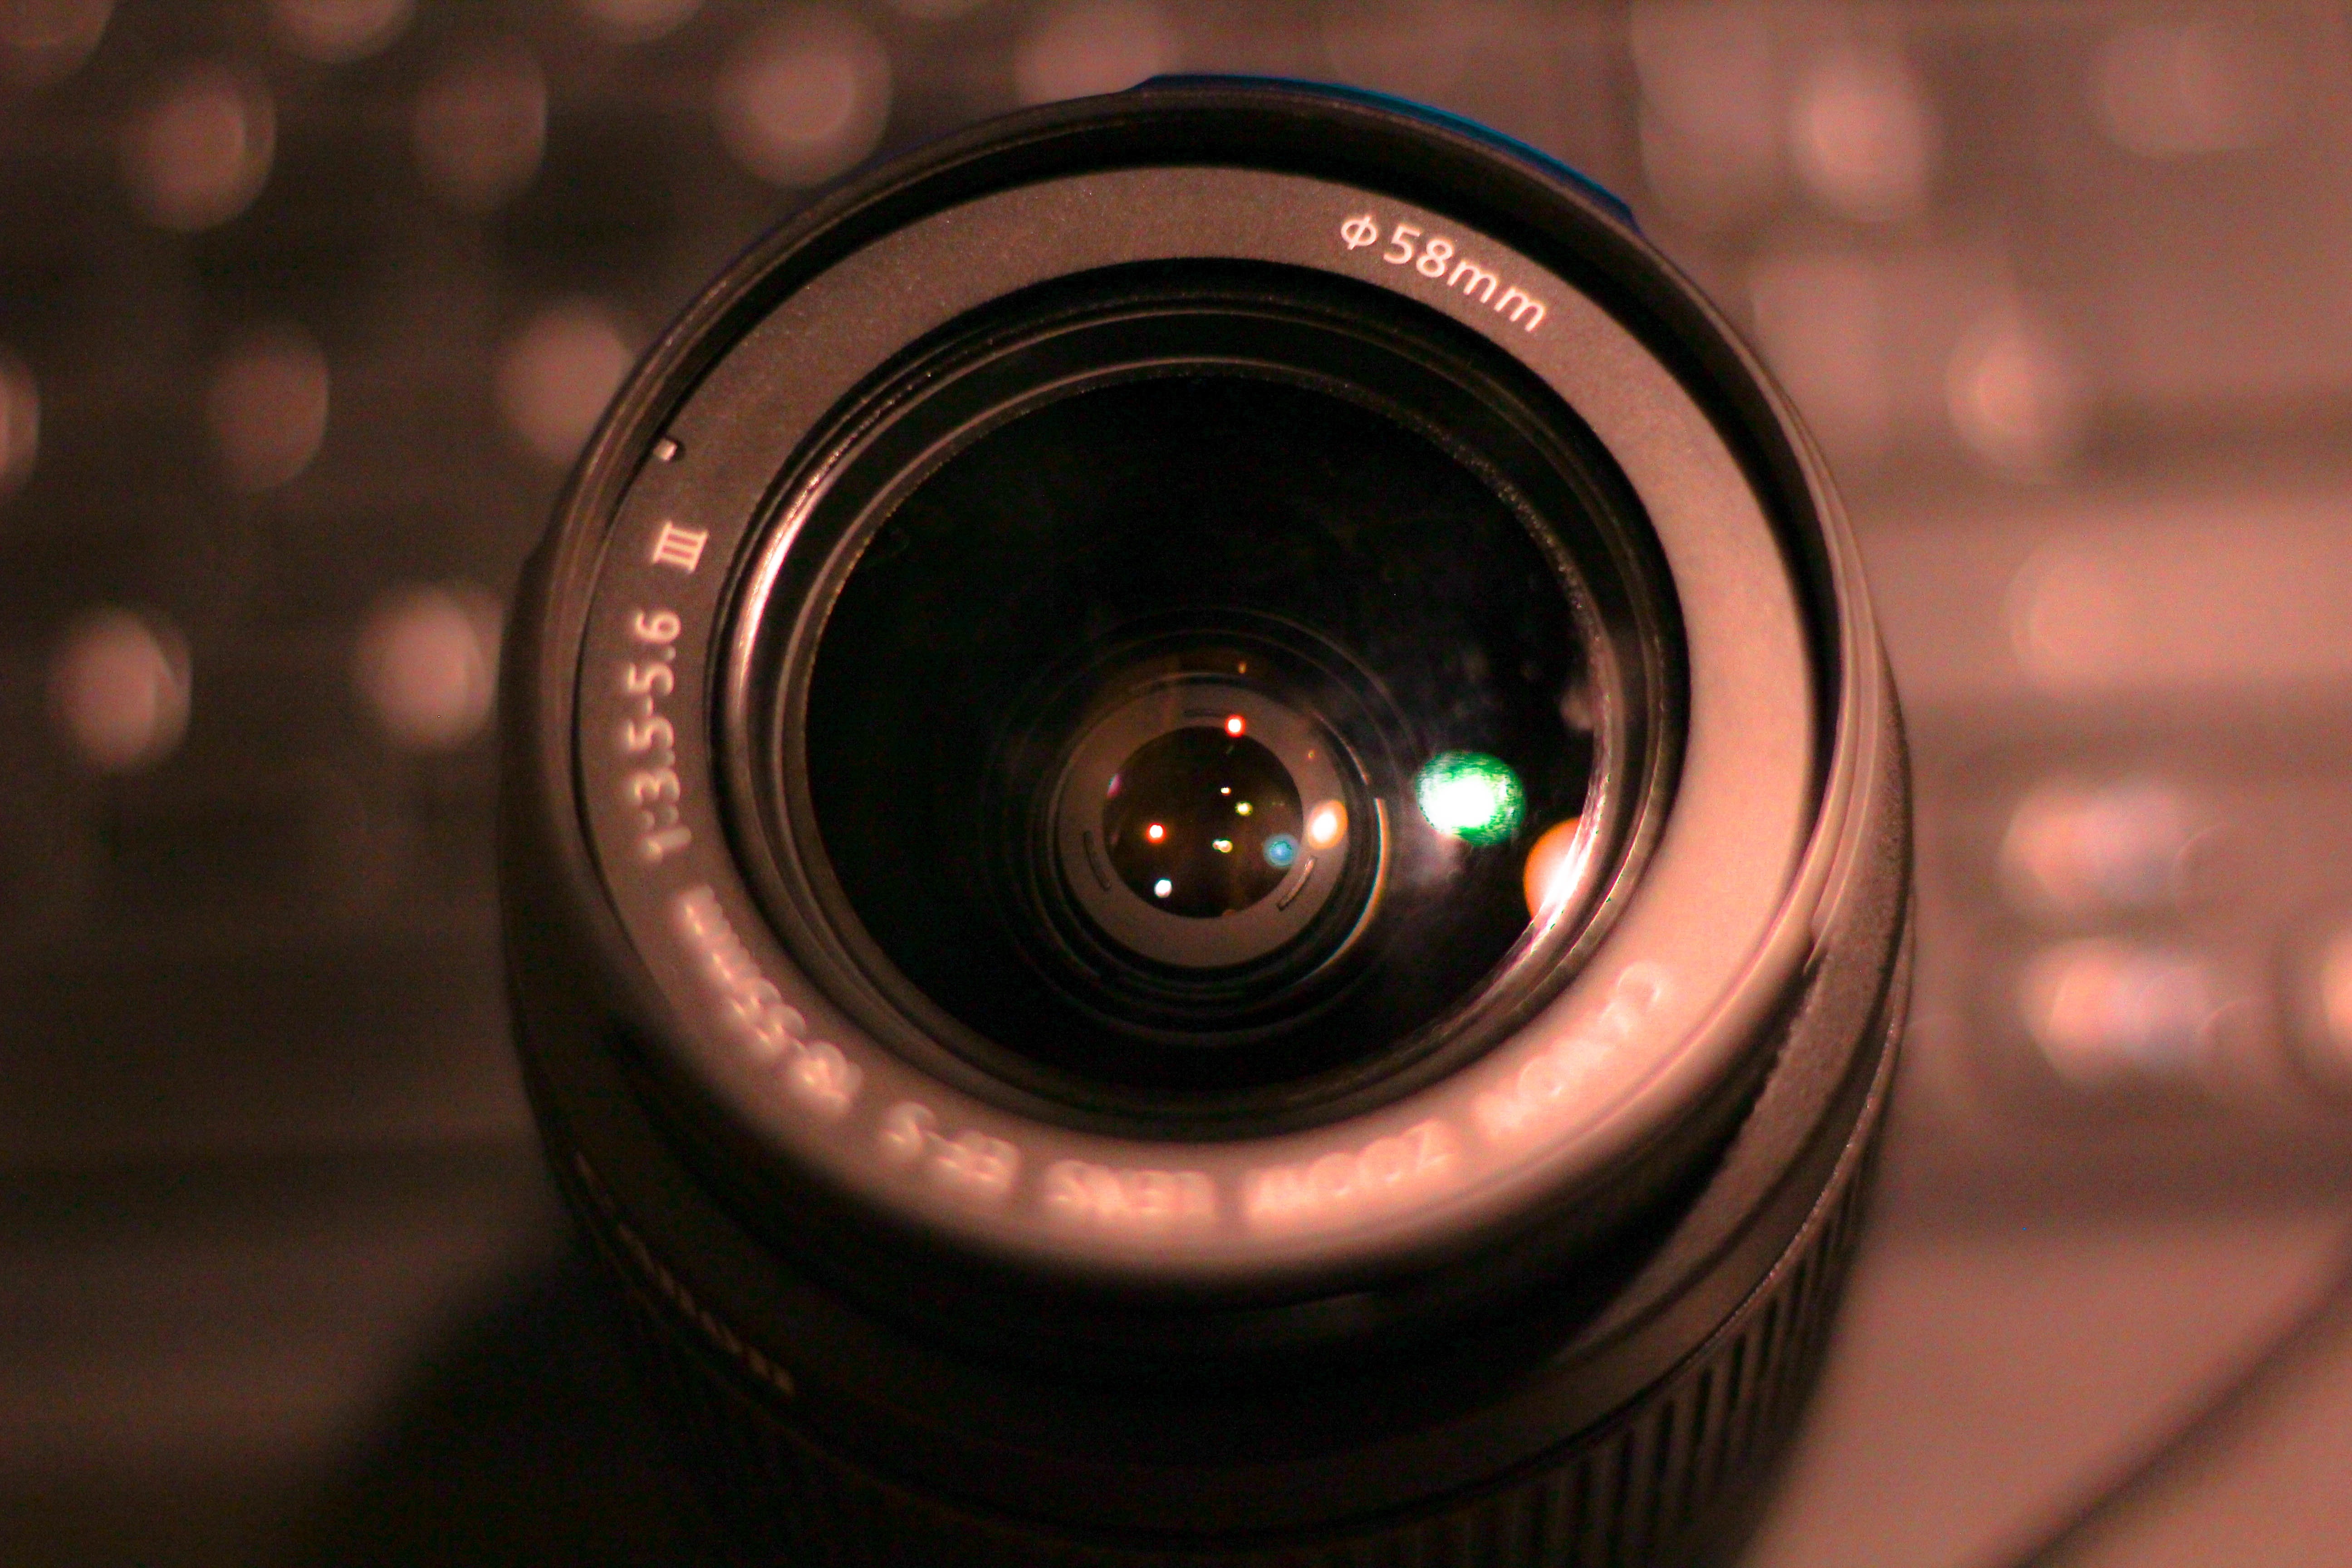 black 58mm prime canon lens